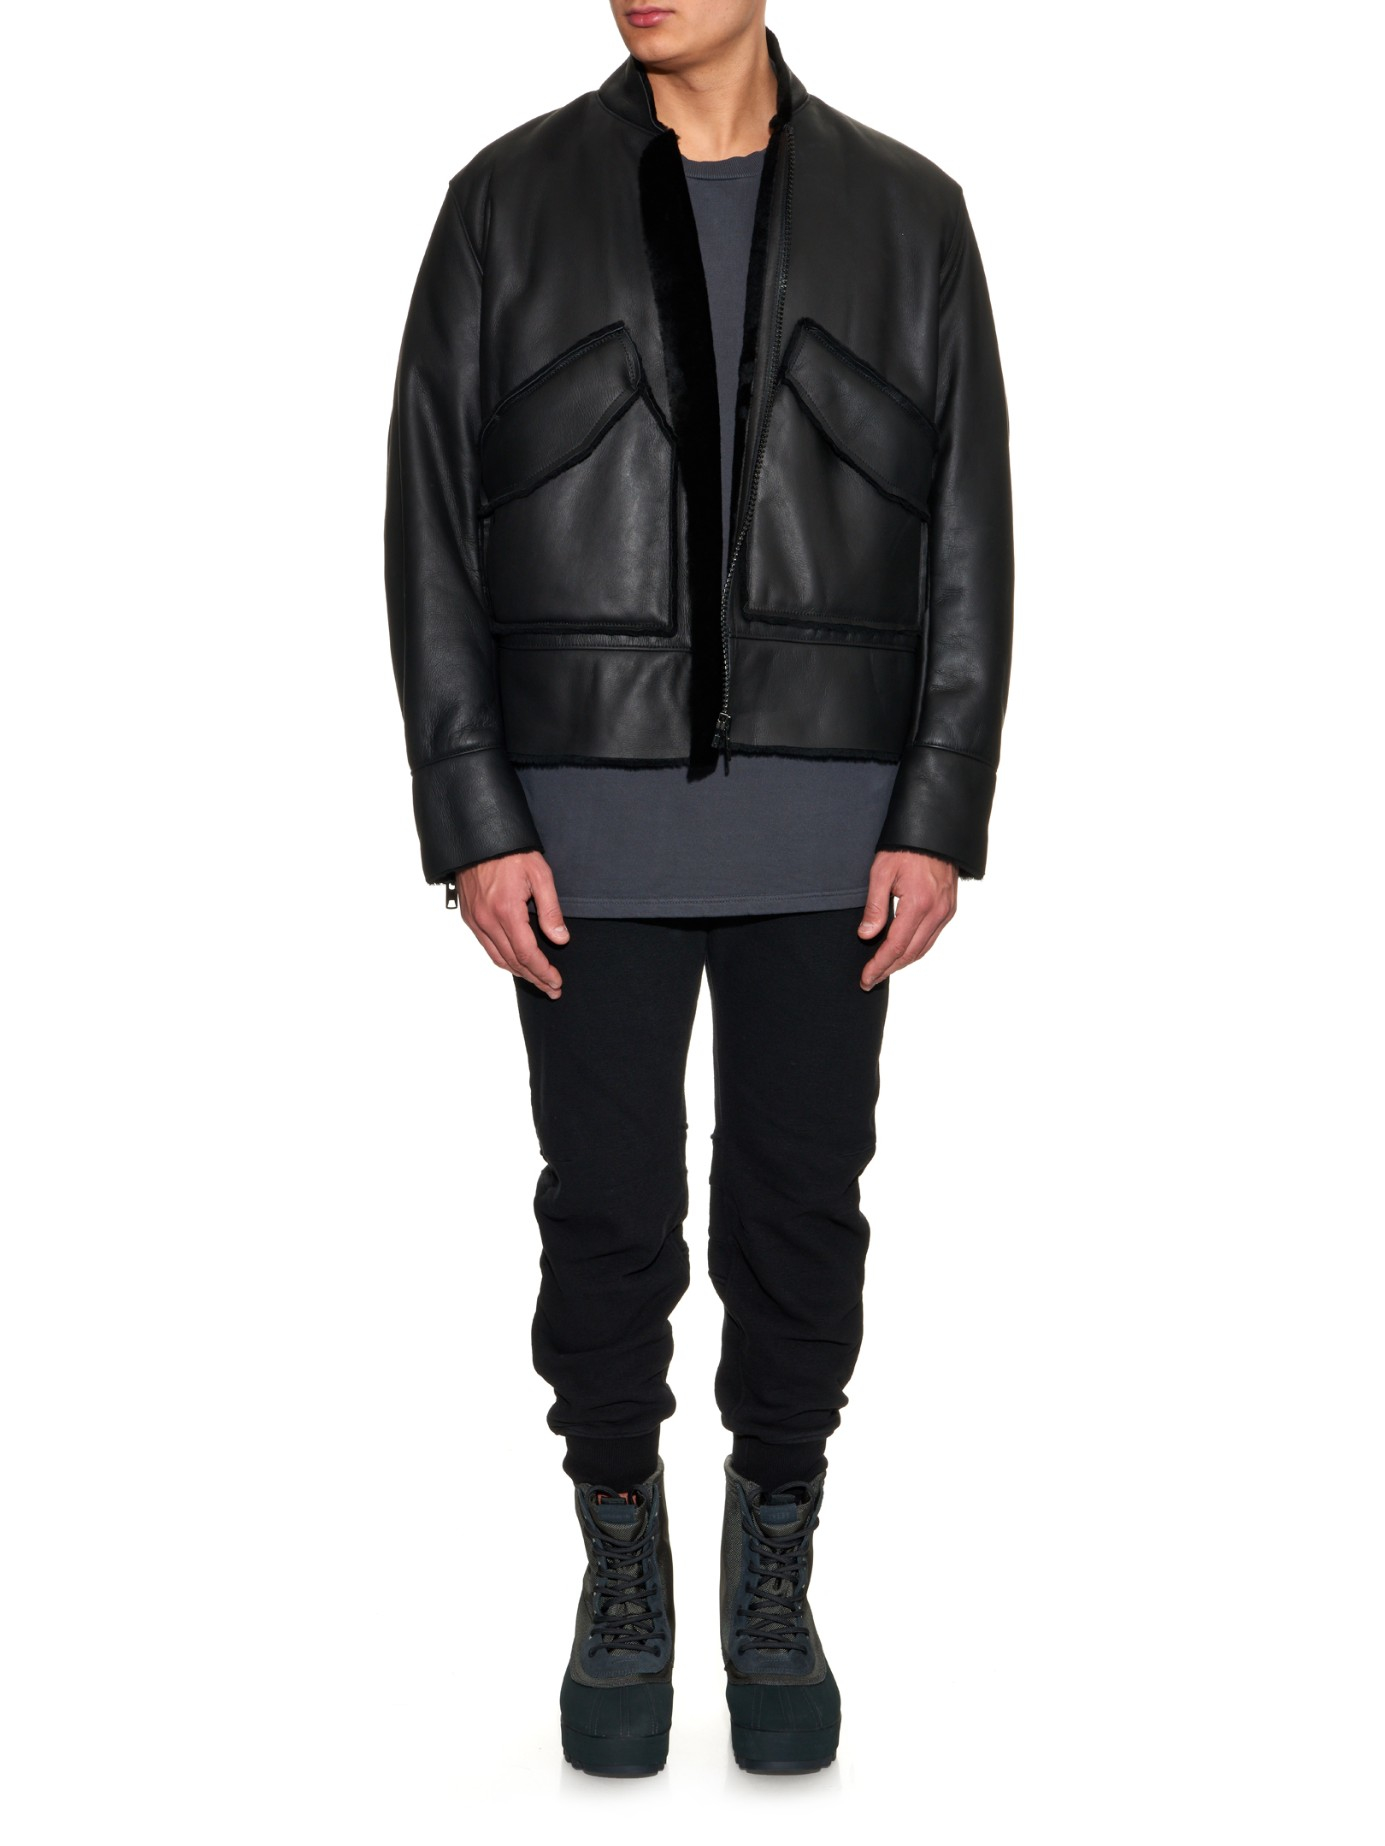 Yeezy Shearling Bomber Jacket In Black For Men Lyst | atelier-yuwa.ciao.jp